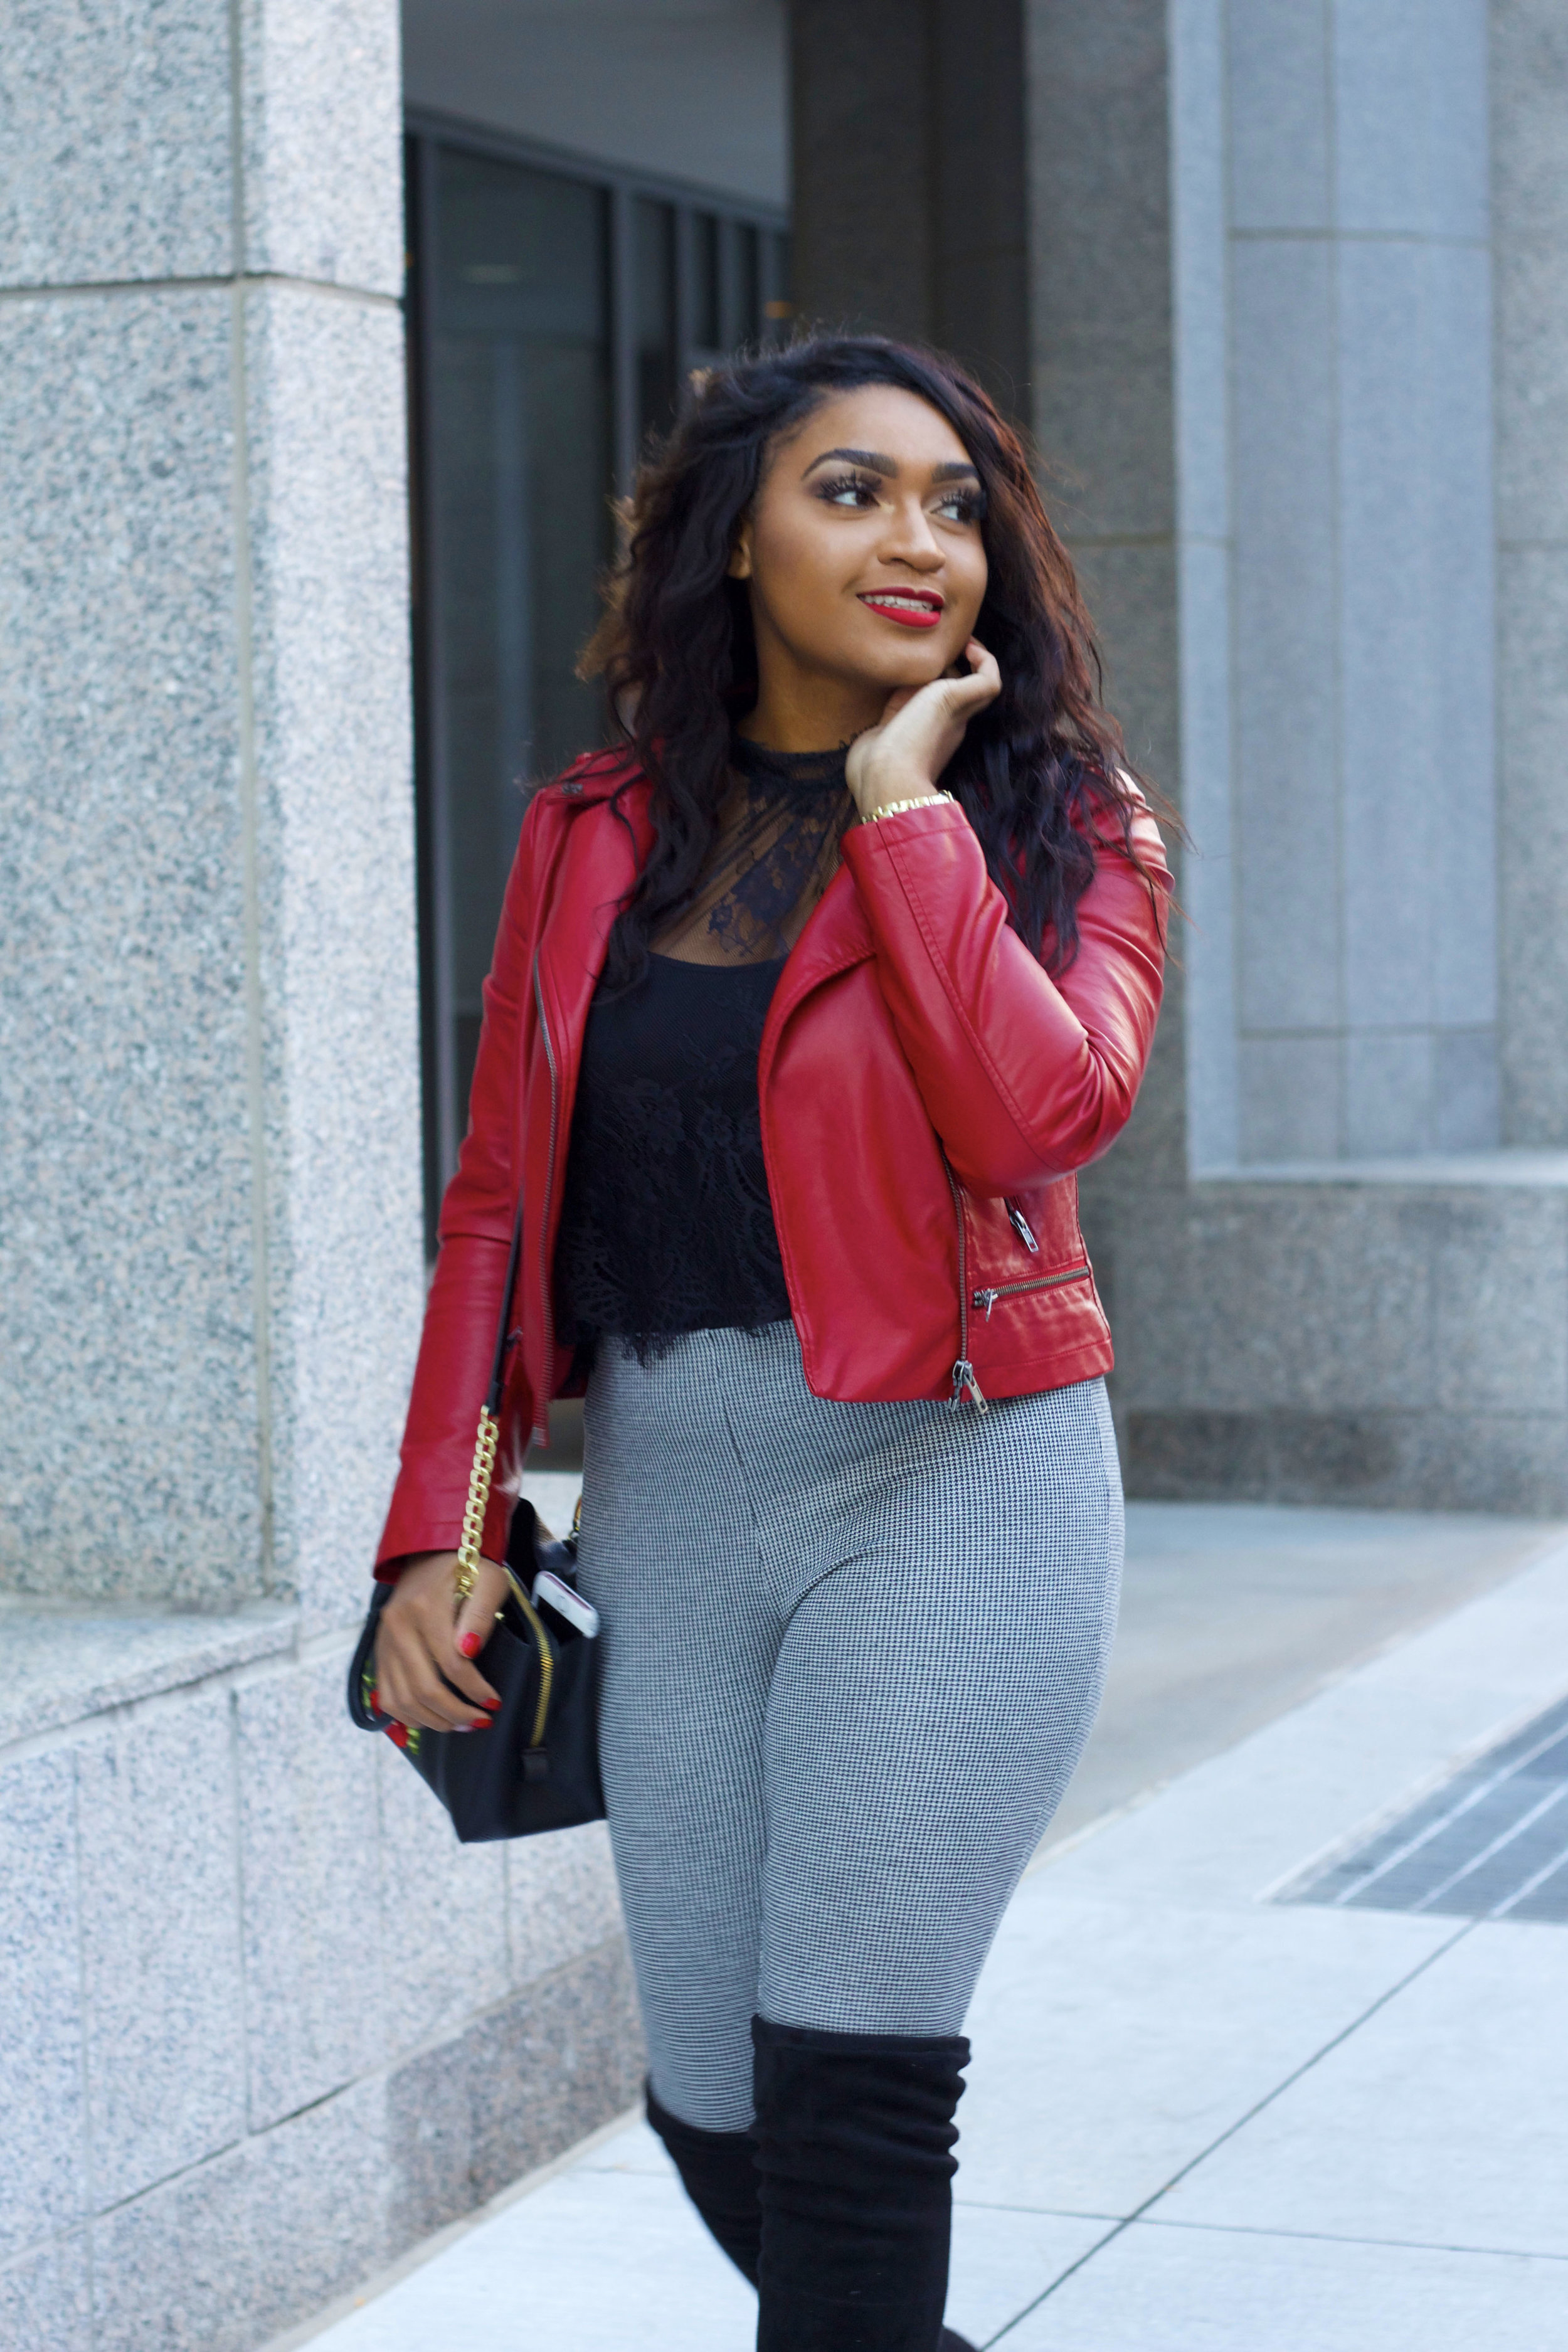 Black Knee High Boots x Red Leather Jacket — Jasmine Diane